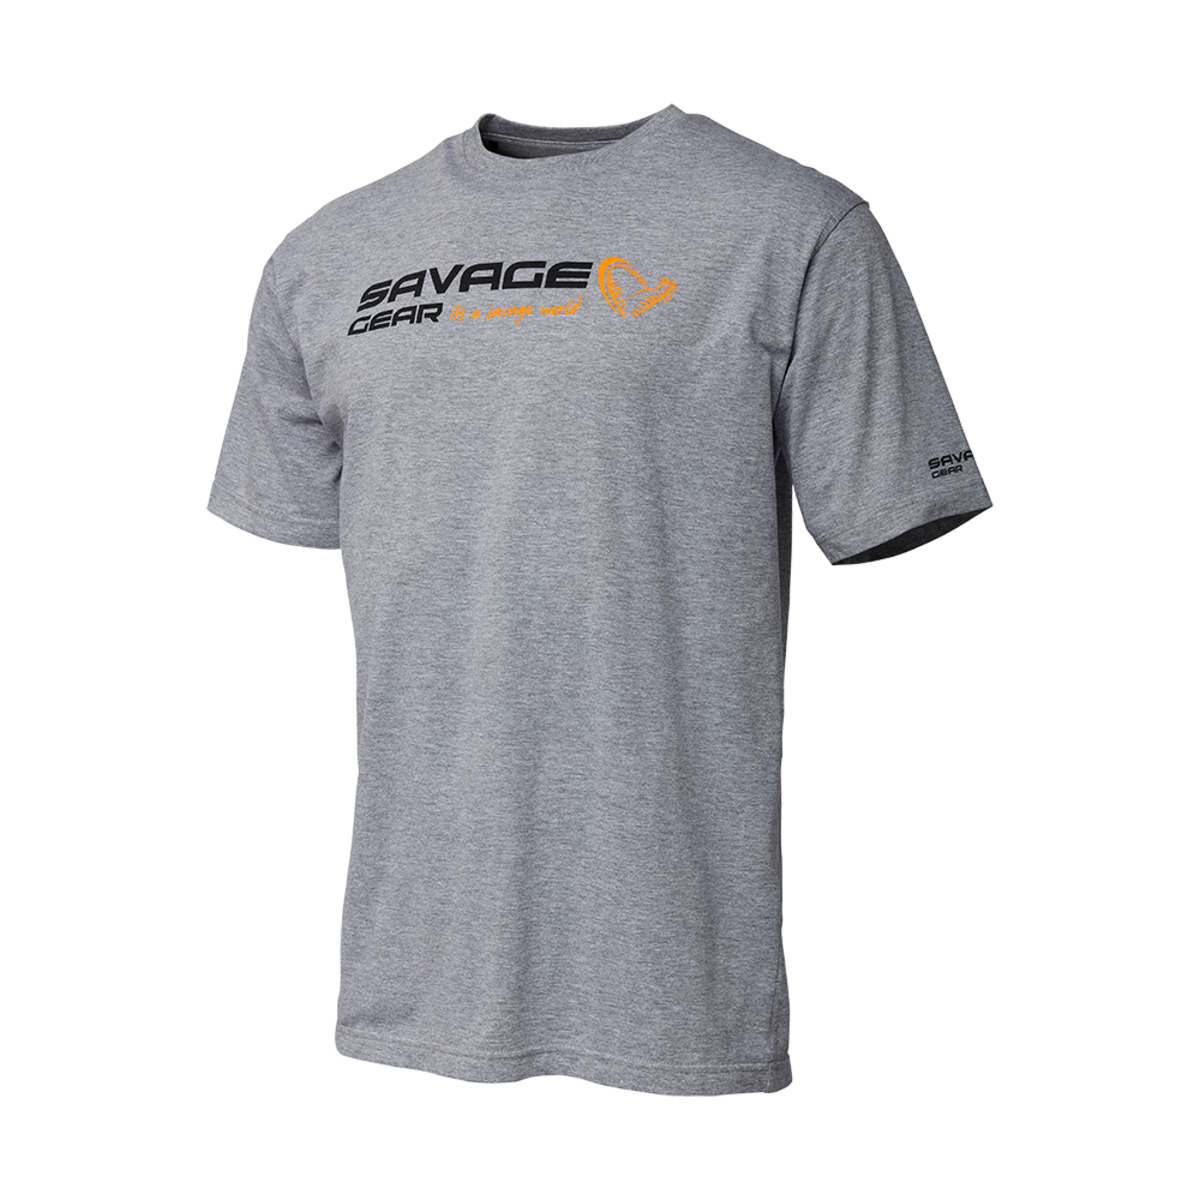 Savage Gear Signature Logo T-shirt - M GREY MELANGE